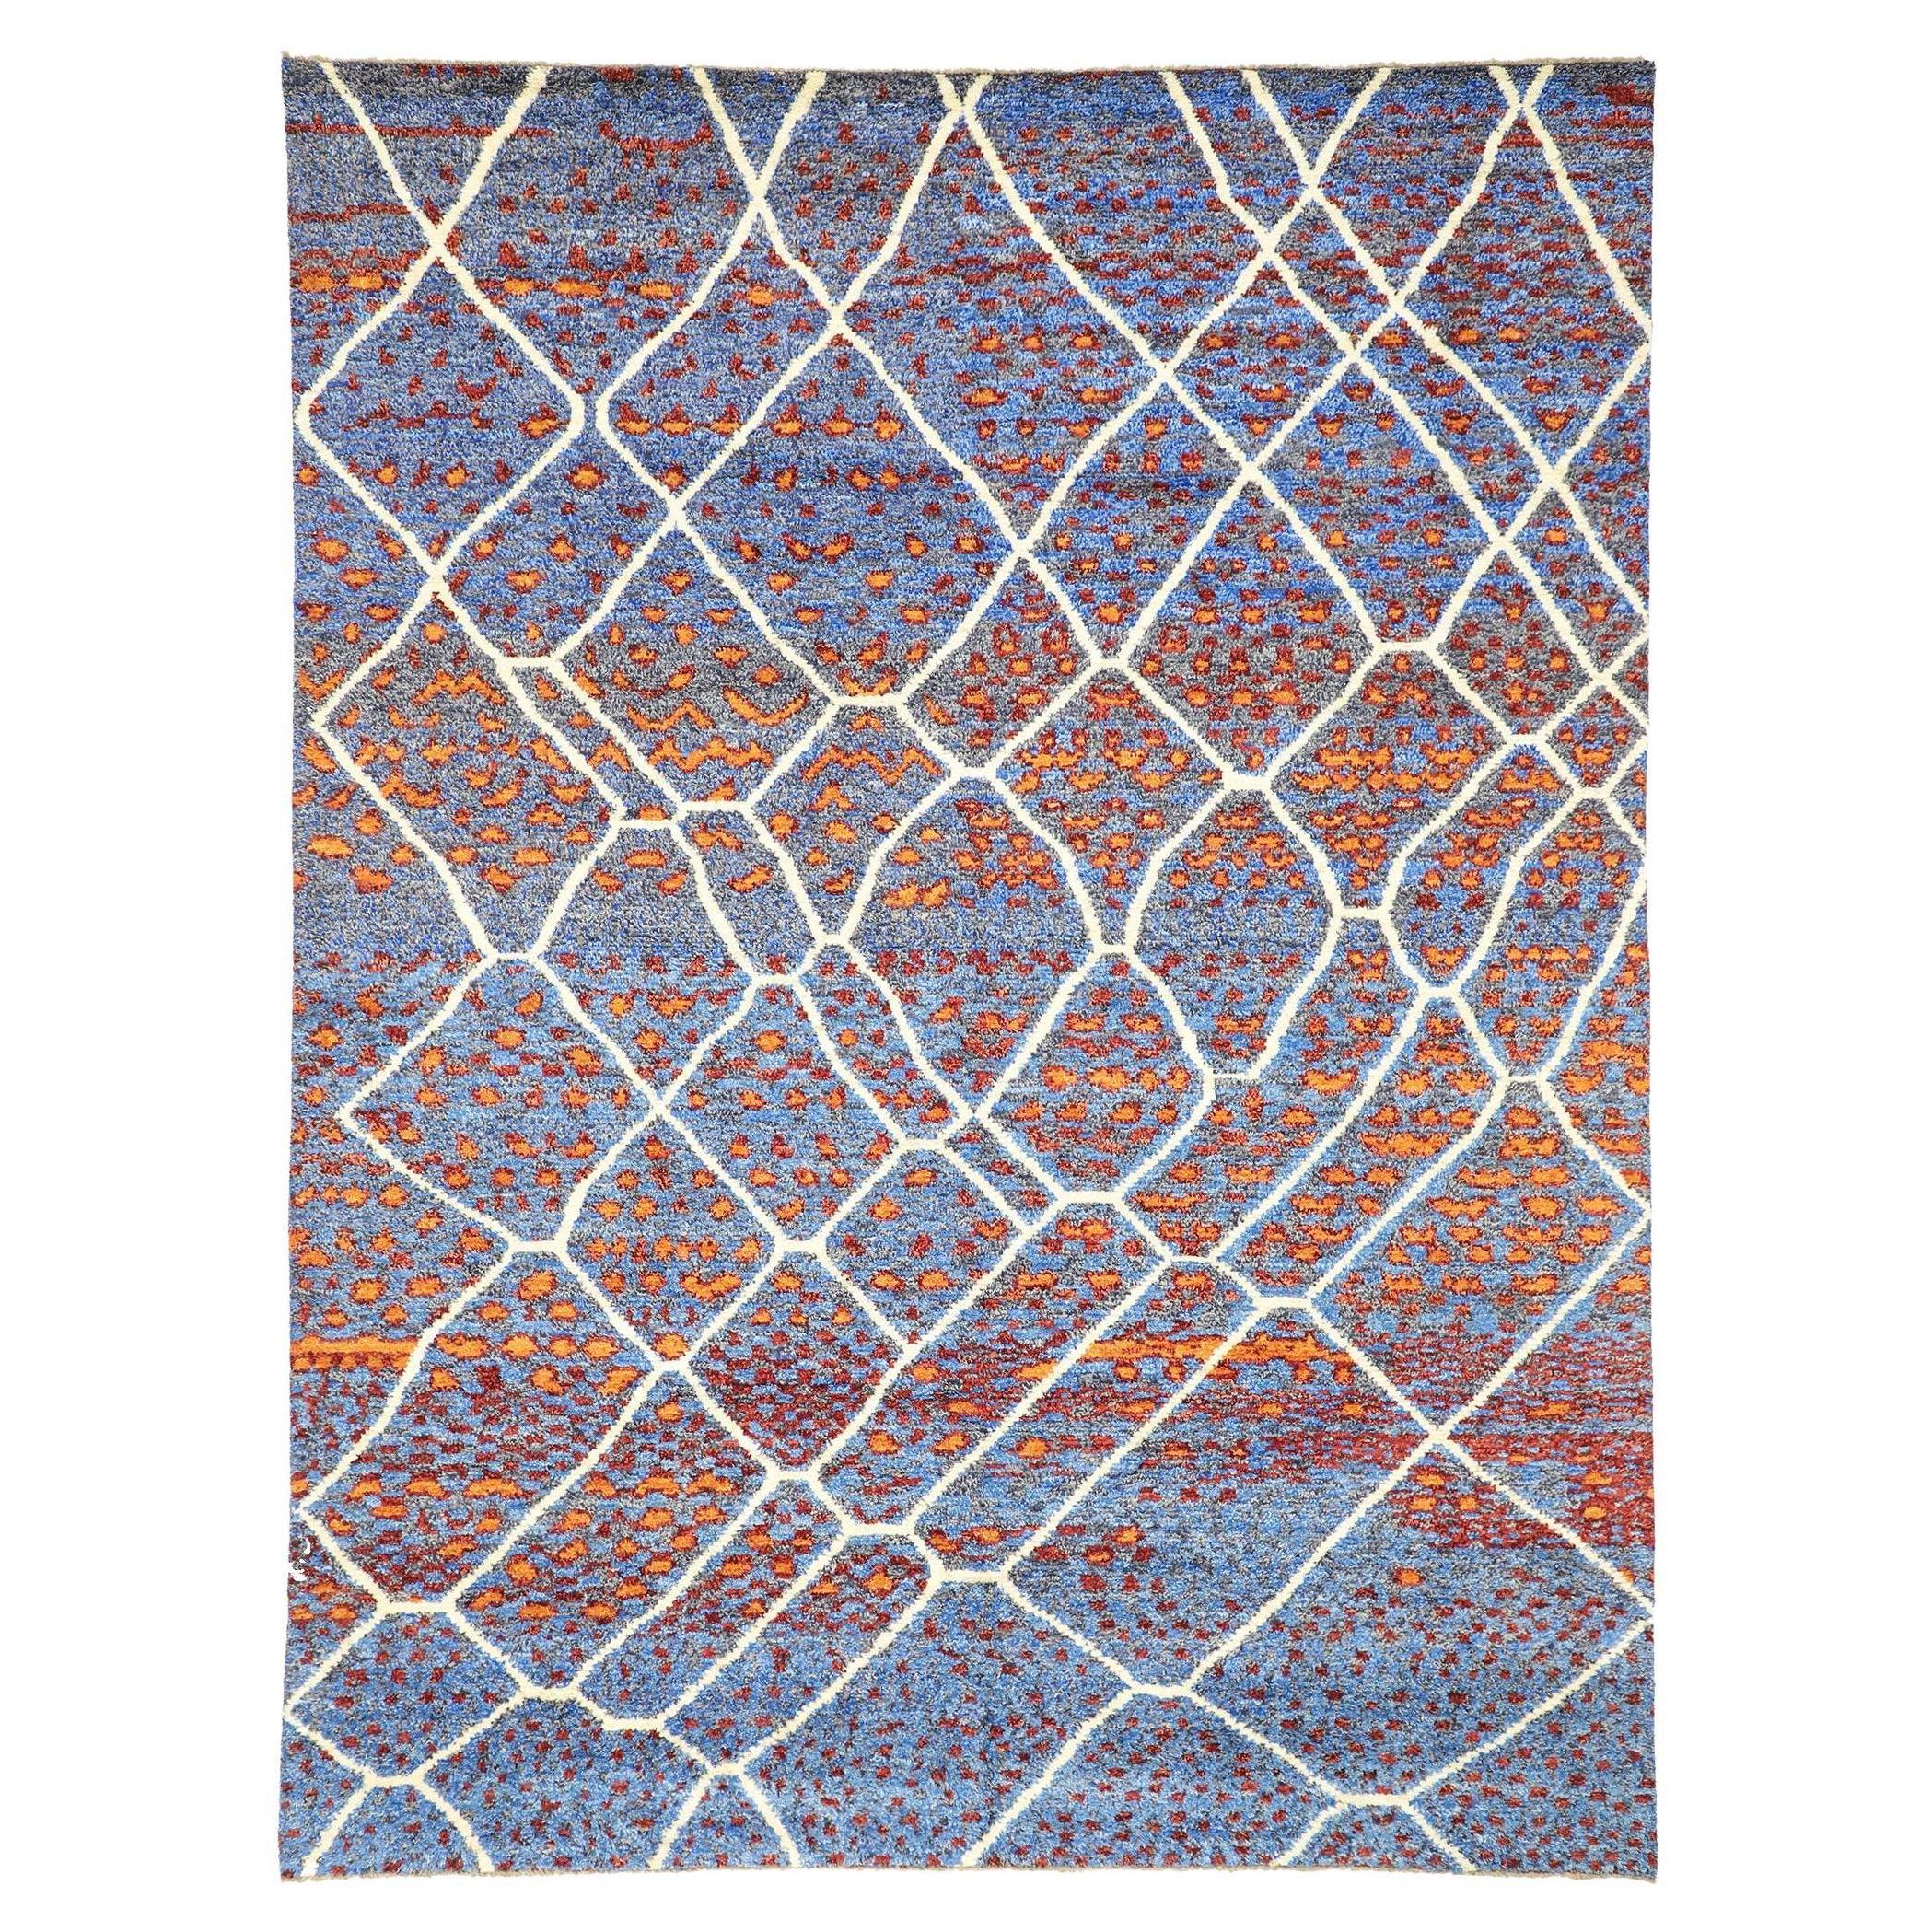 Grand tapis marocain abstrait, breloque nomade rencontre l'expressionnisme abstrait